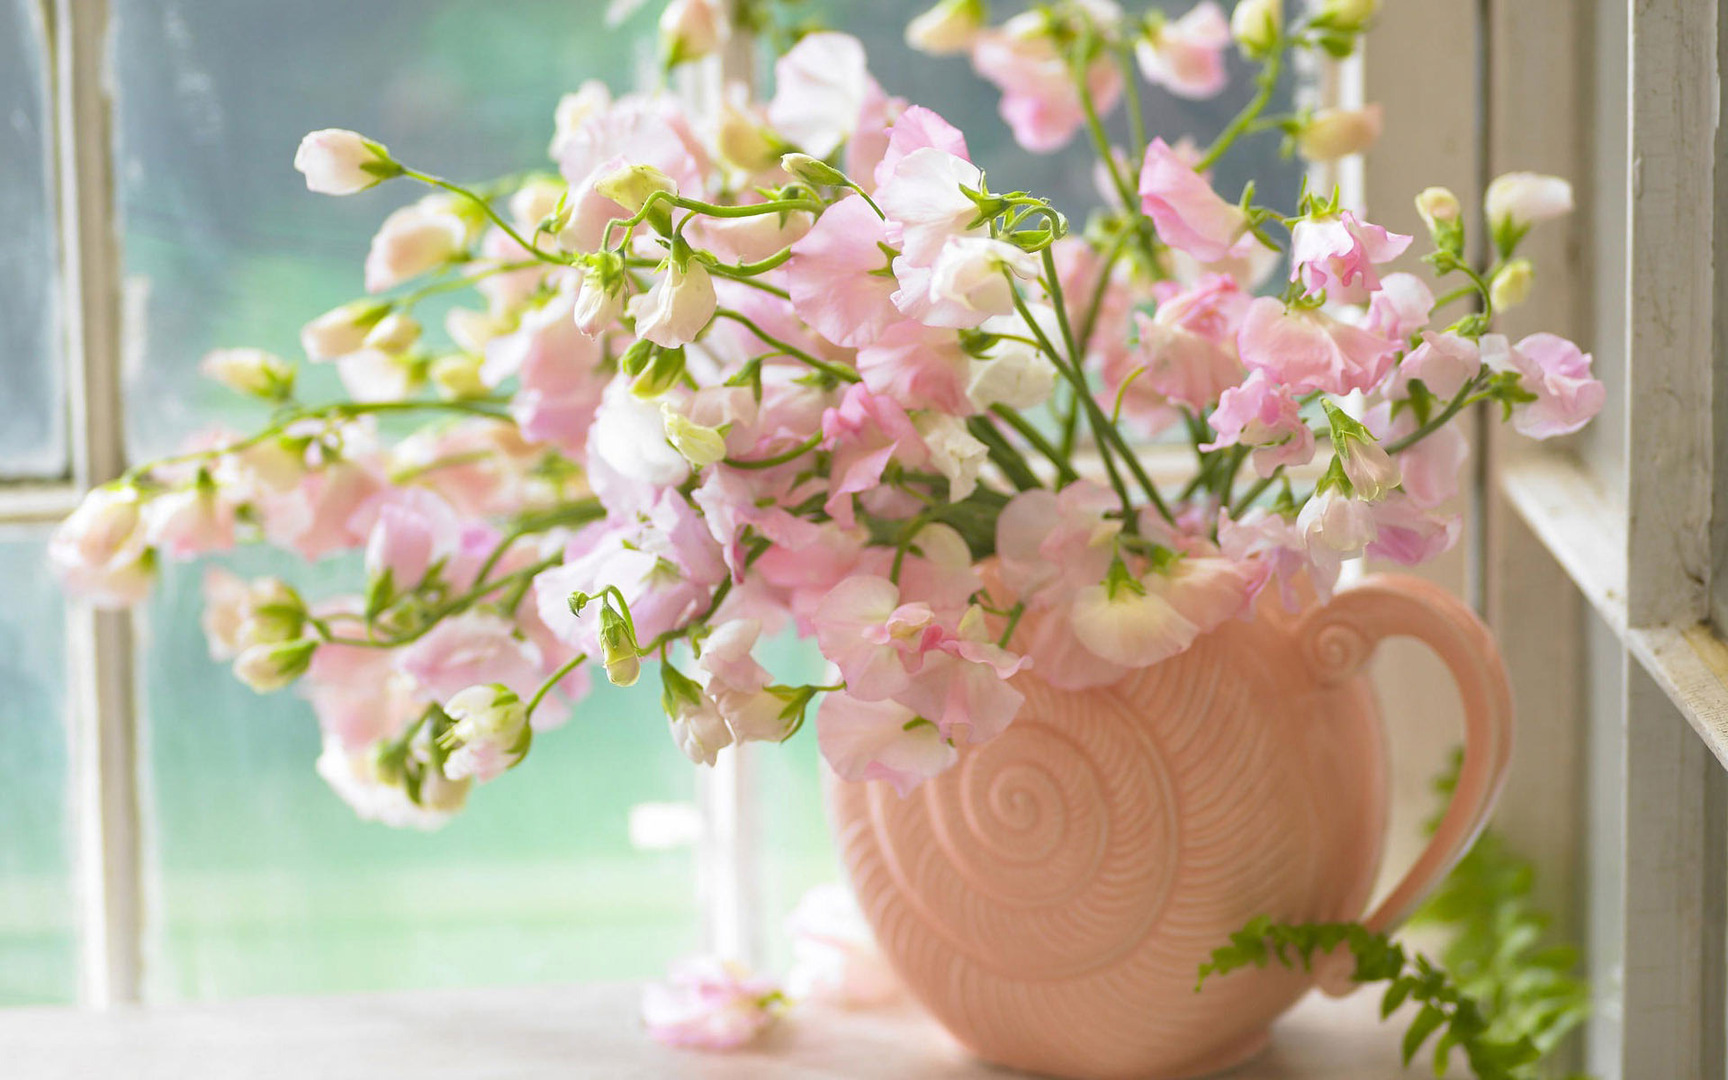 Pink Sweet Peas 1080p Flowers HD Wallpaper for Desktop | HD ...